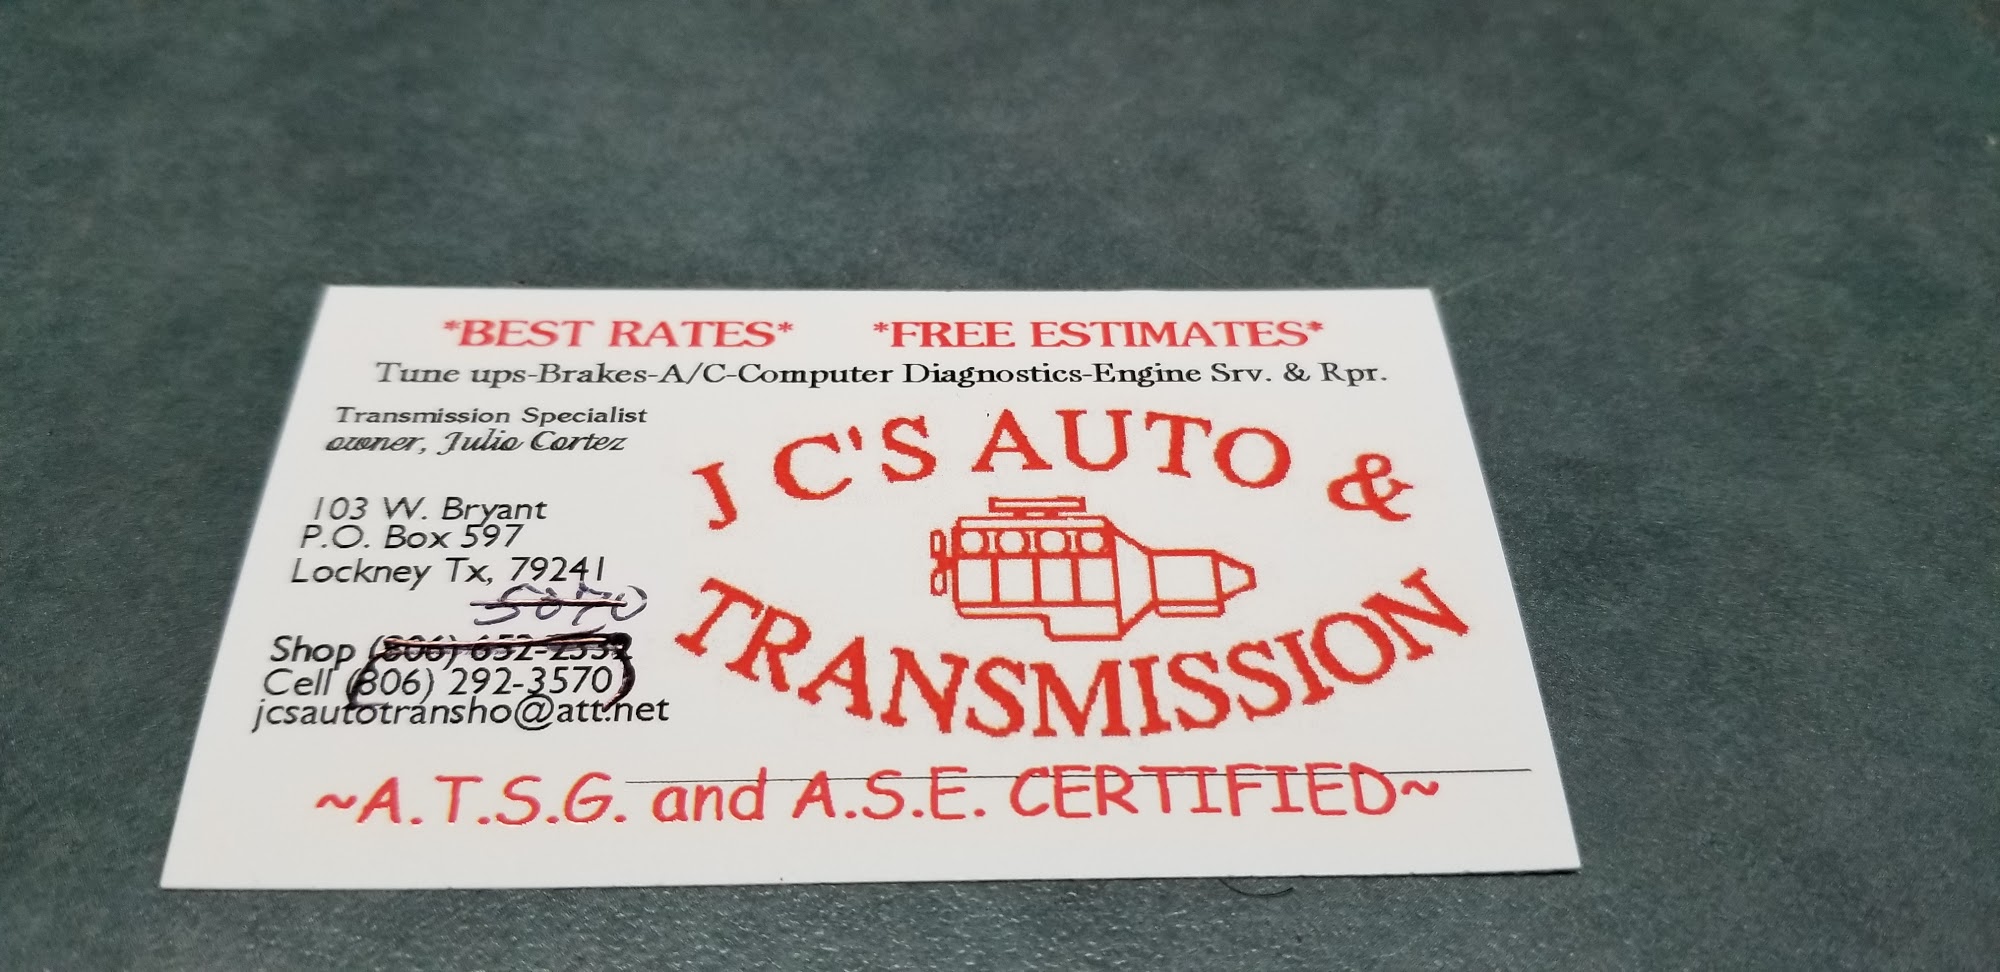 JC's Auto & Transmission